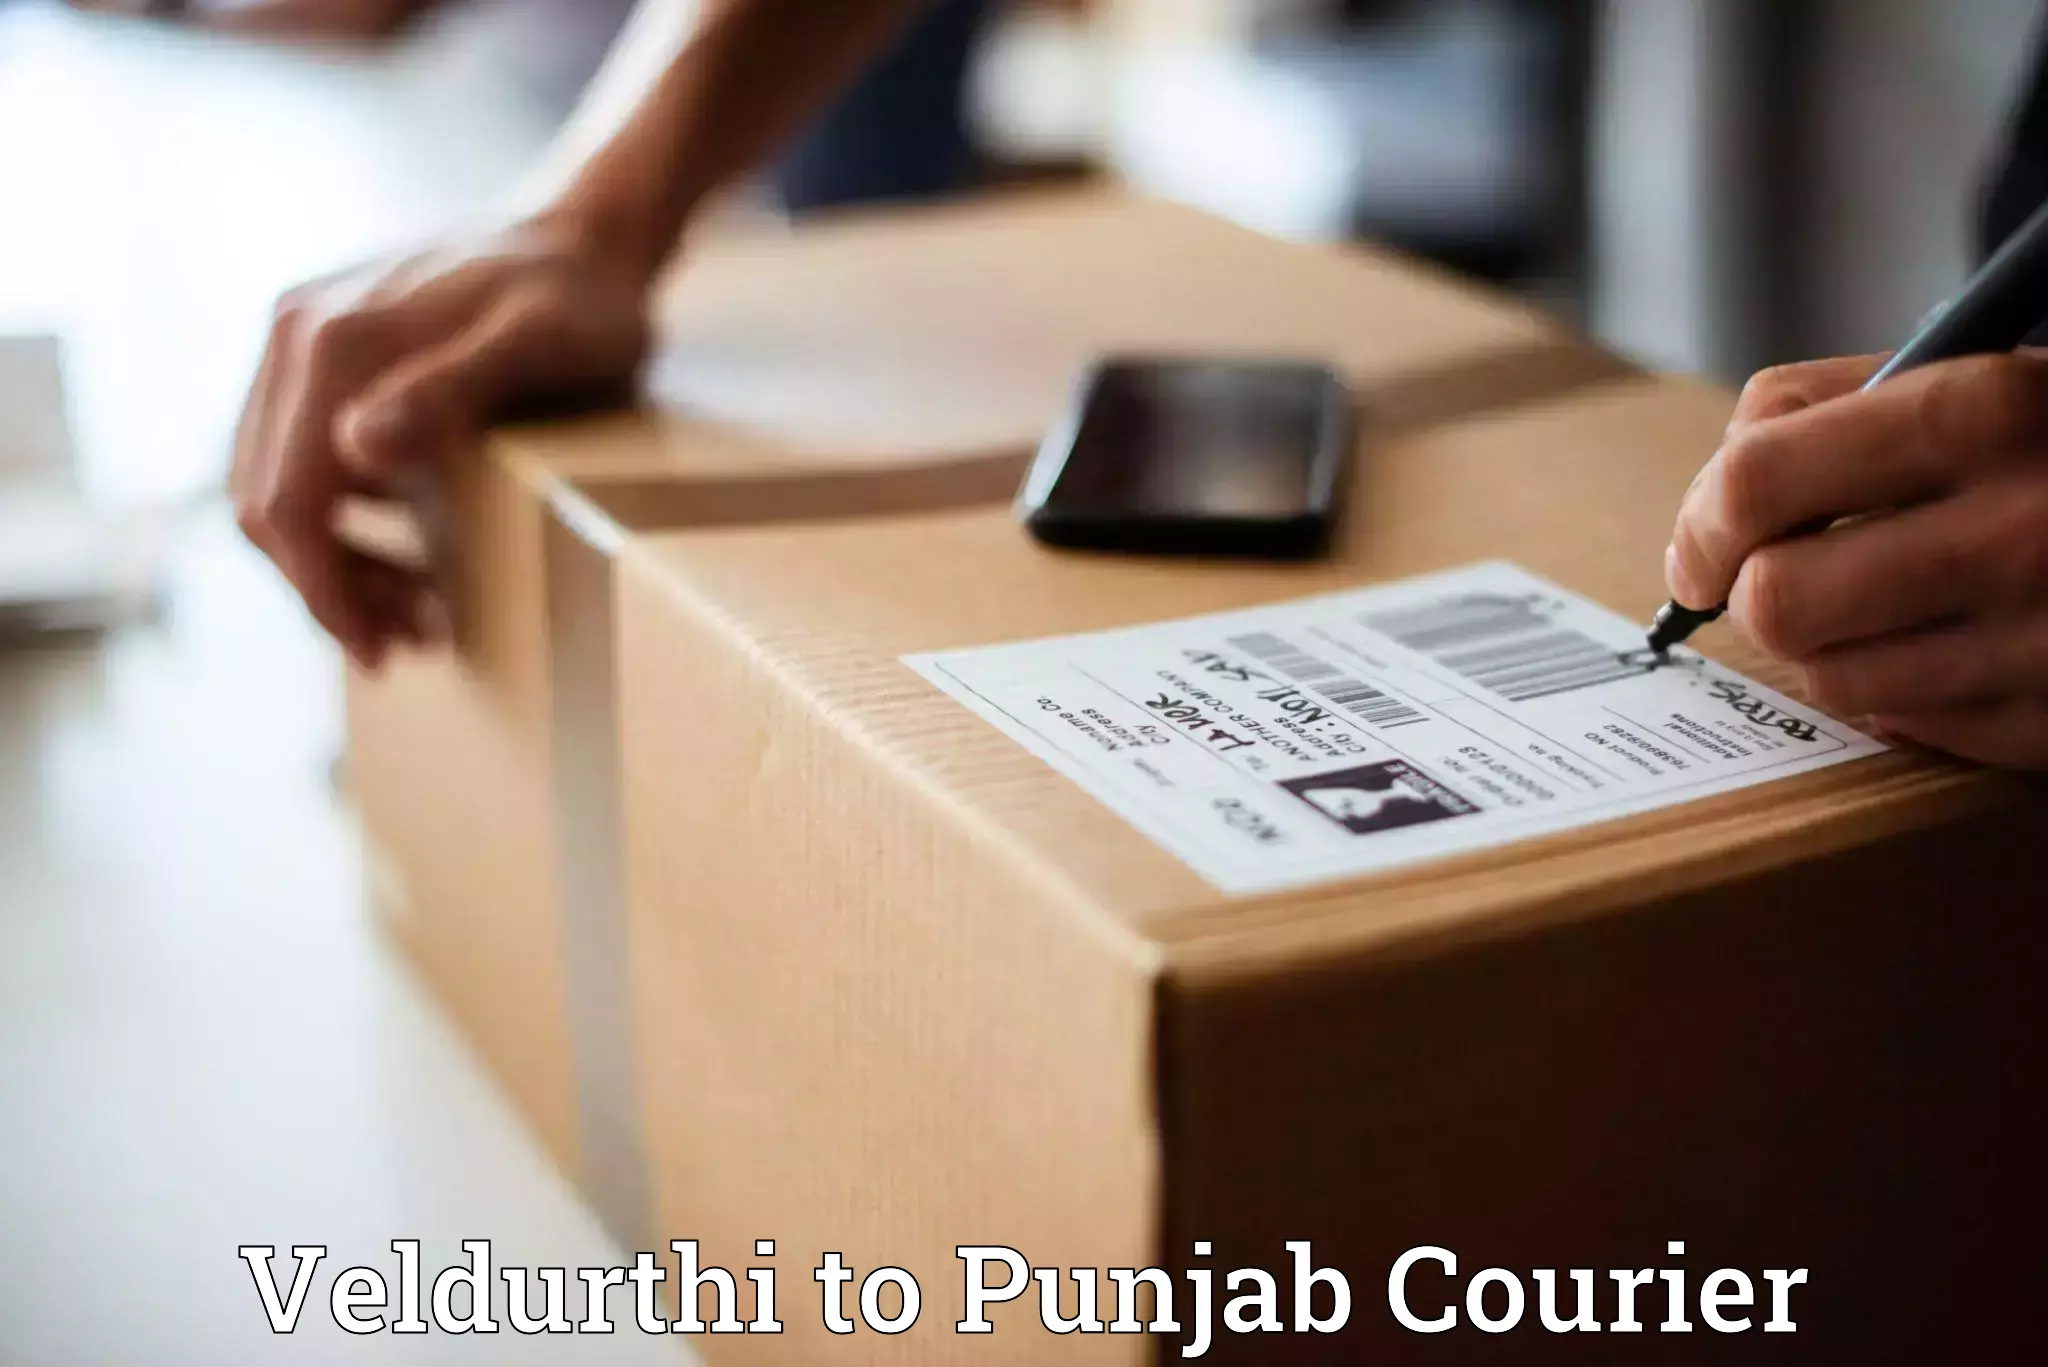 Courier service innovation Veldurthi to Punjab